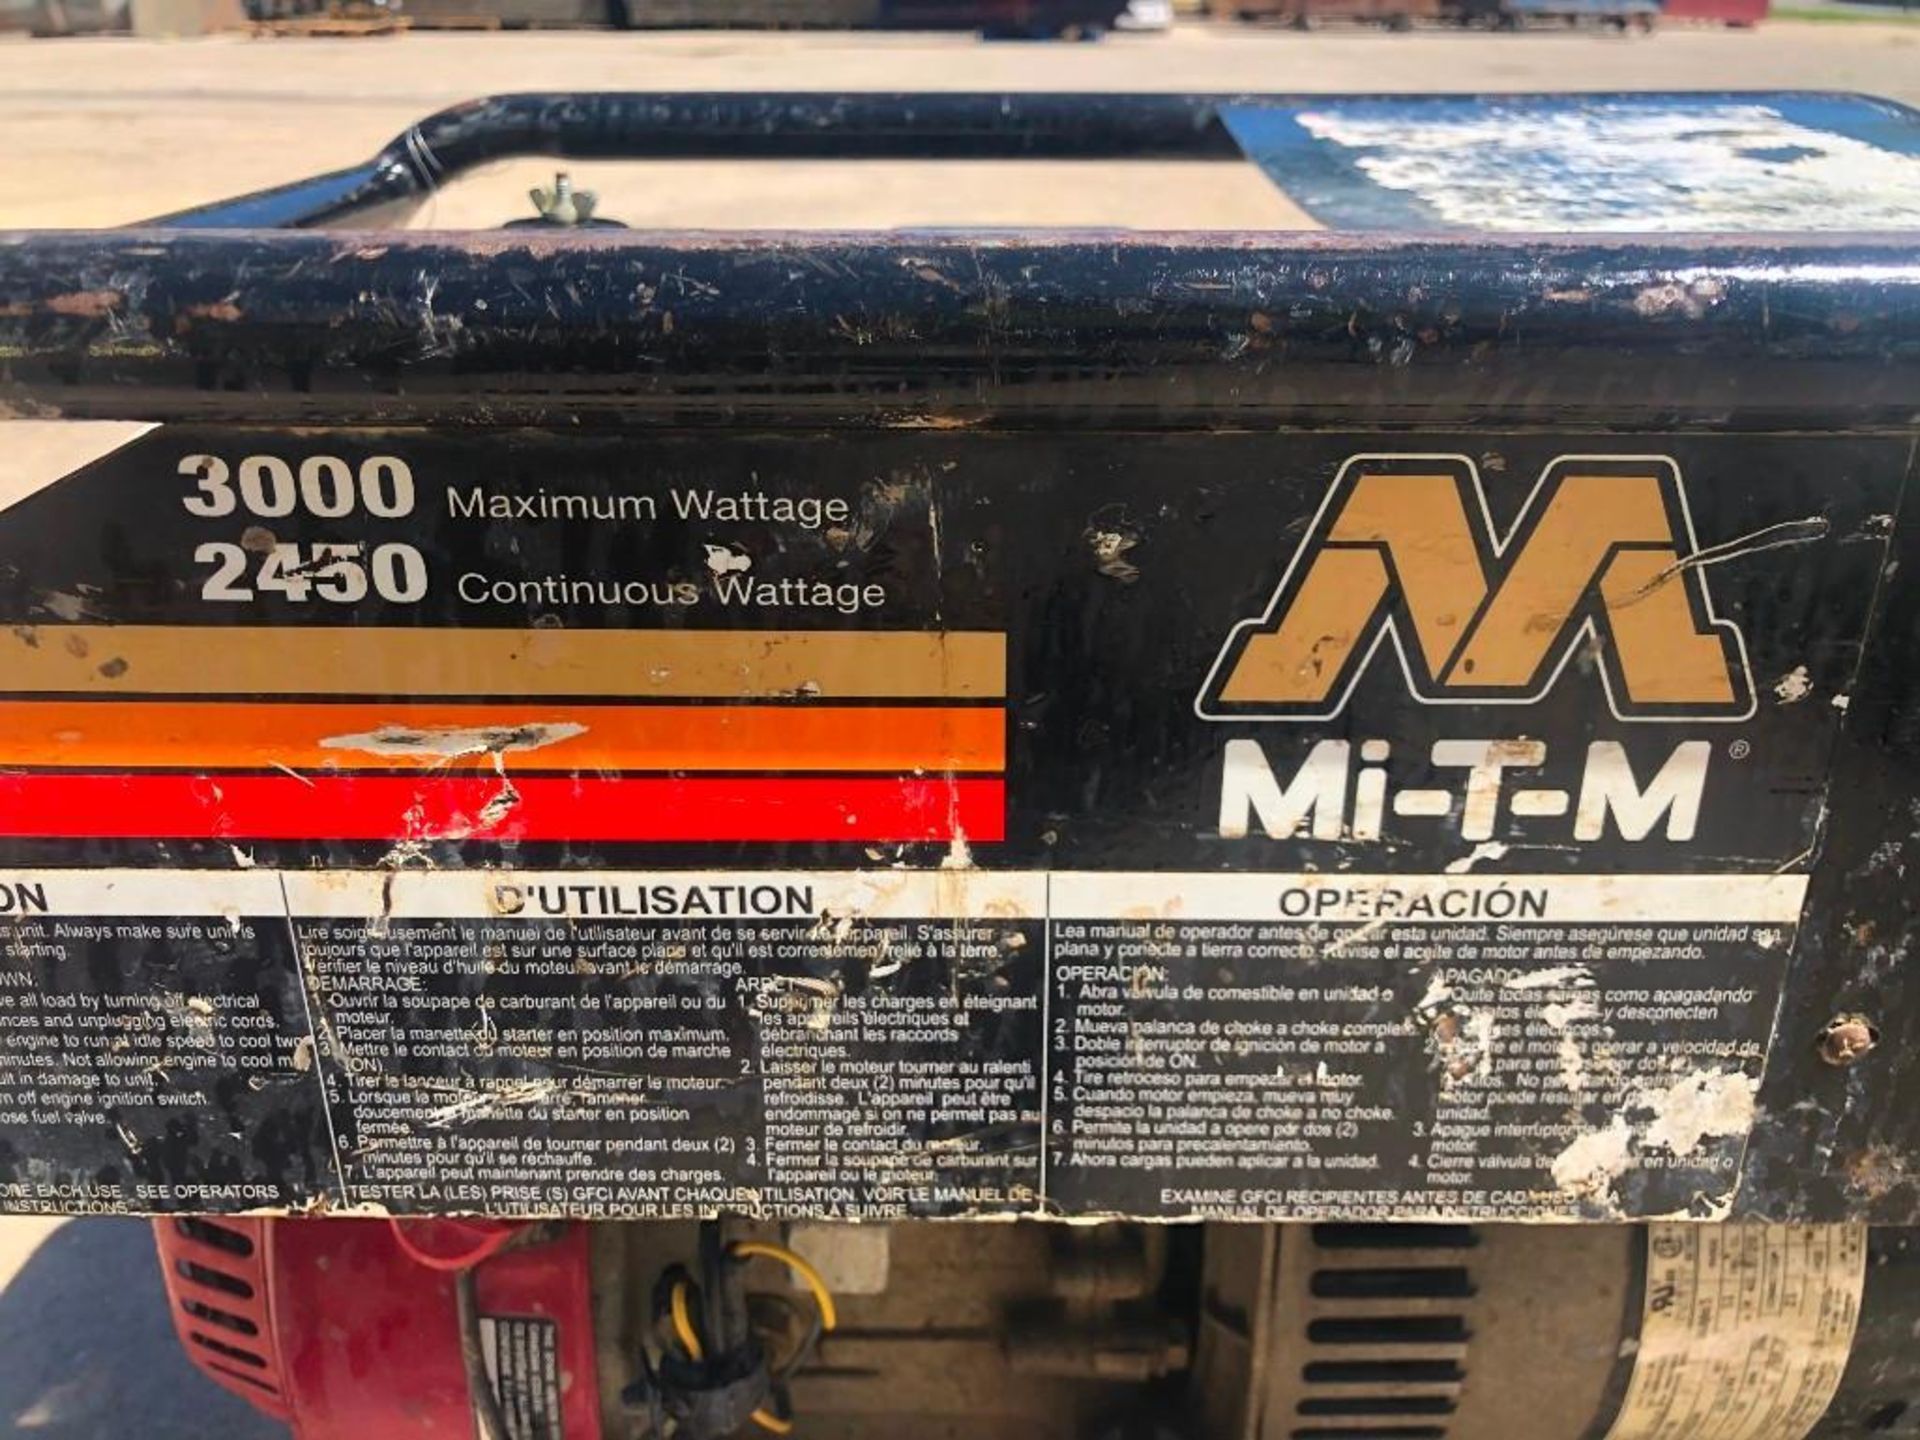 Mi-T-M Generator, Serial #40064426, Model GEN-3000-OMHO. Located at 301 E Henry Street, Mt. - Image 3 of 4